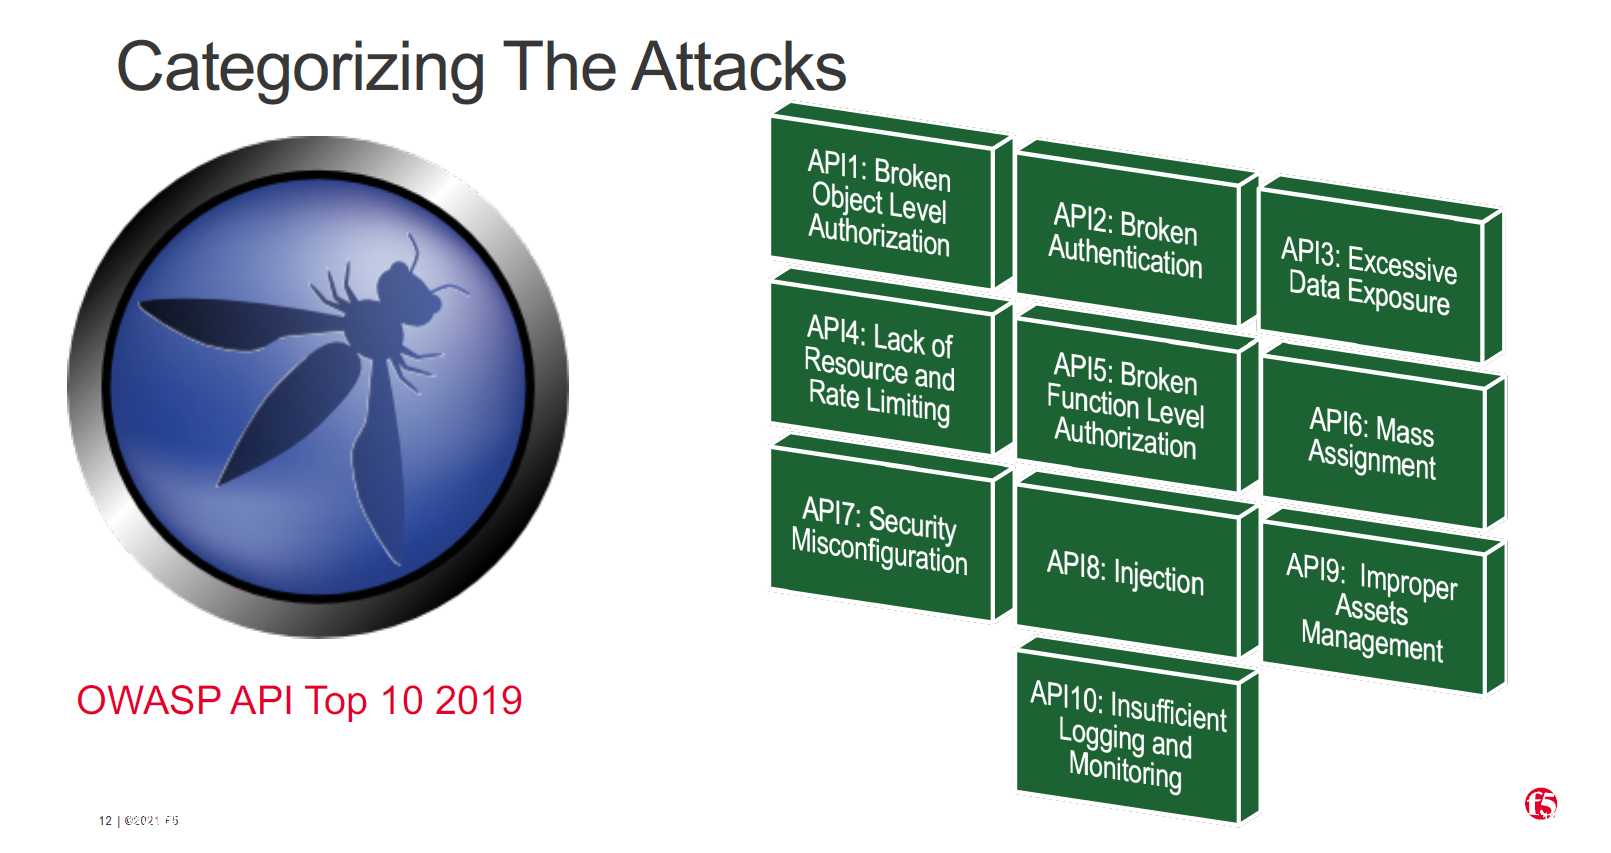 OWASP attack categories